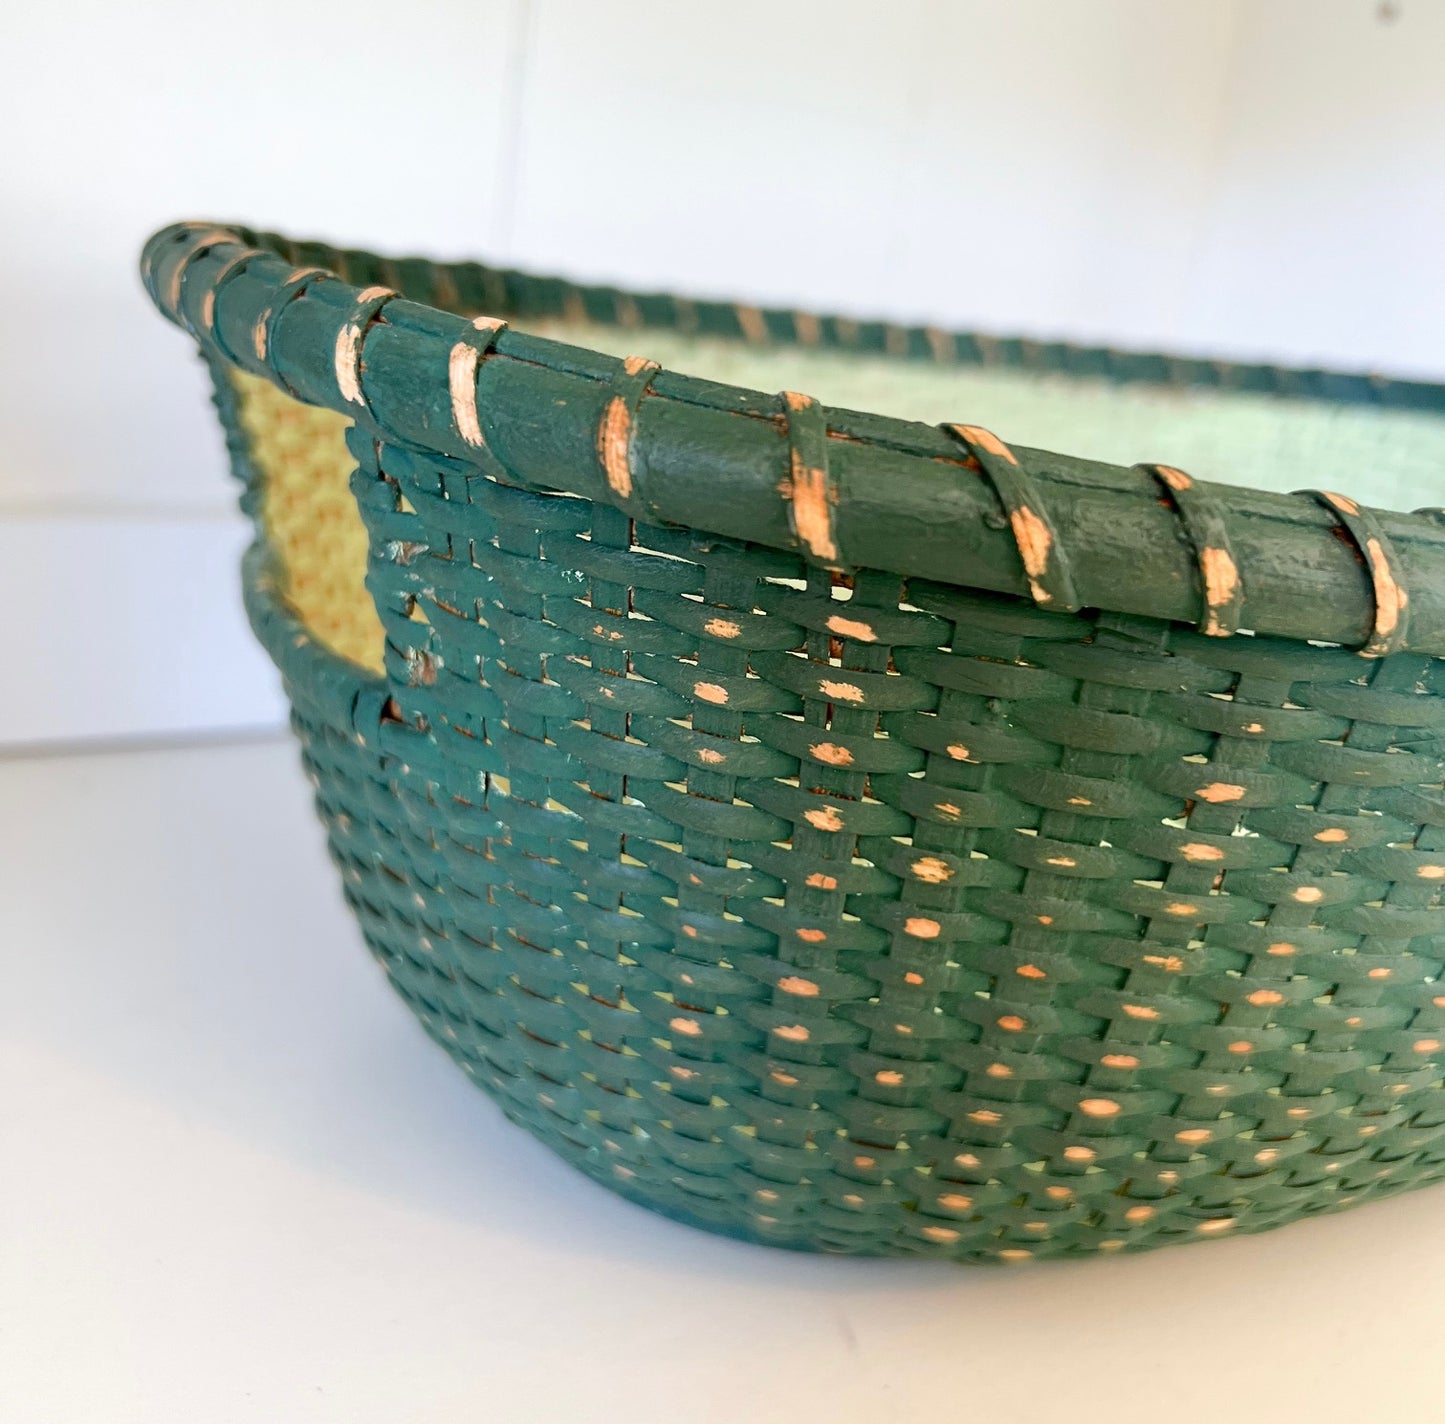 Primitive painted Nantucket style Basket